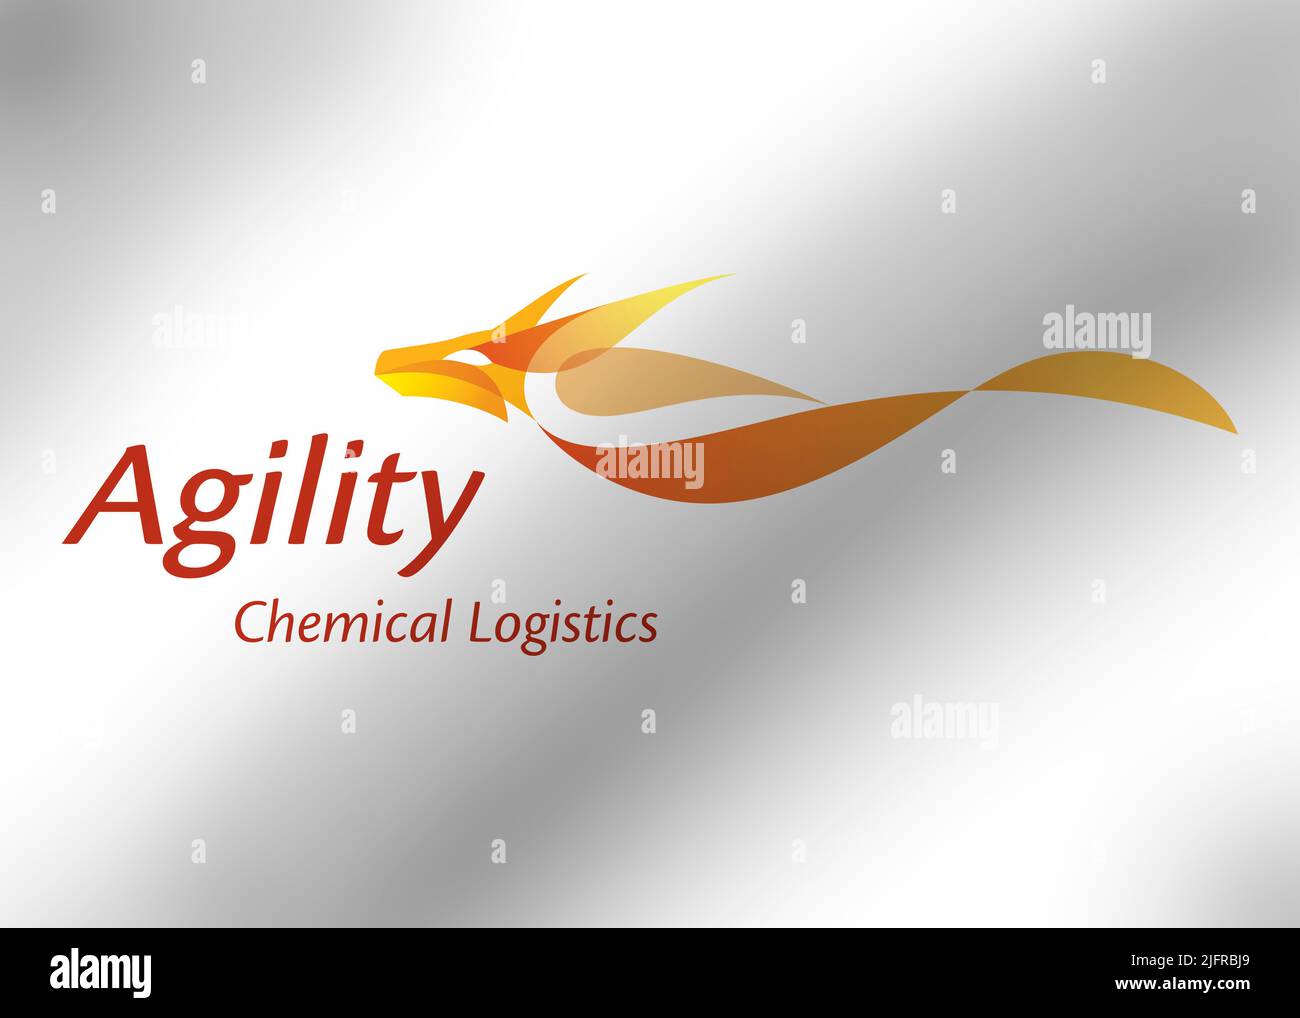 Agility Chemical Logistic Stock Photo